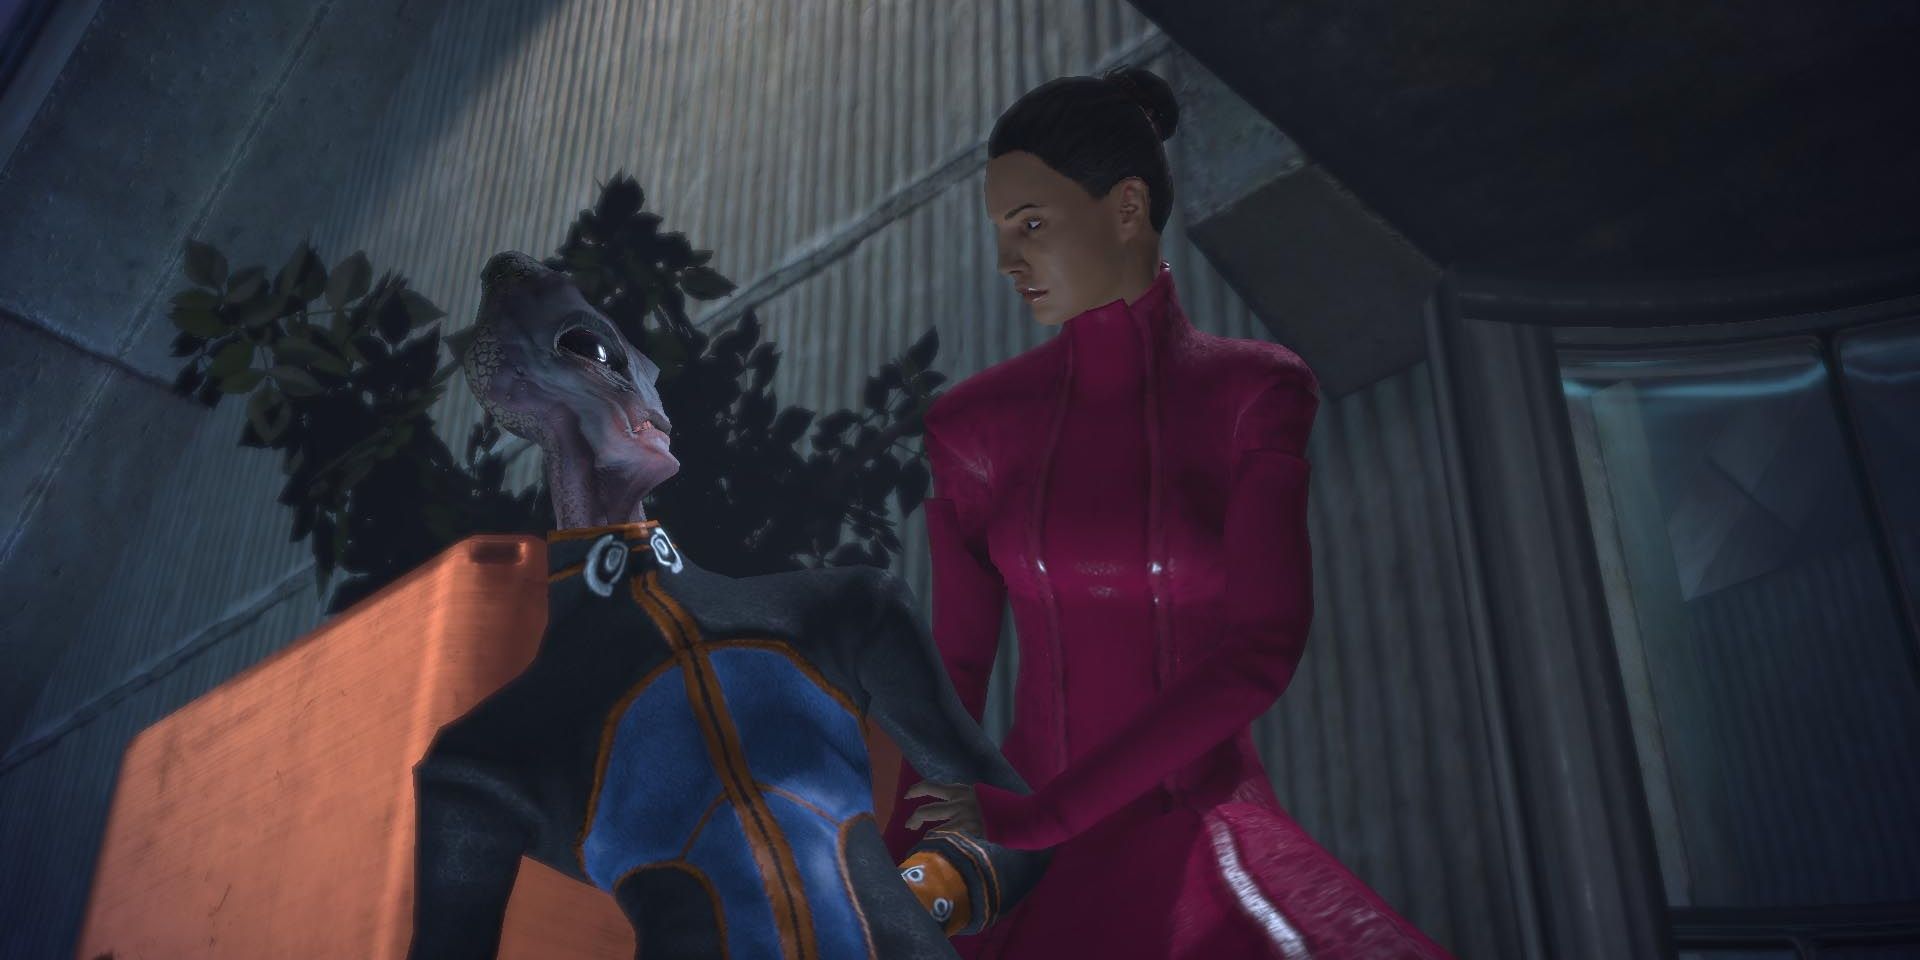 Gianna Parasini Arresting Anoleis From Mass Effect 1